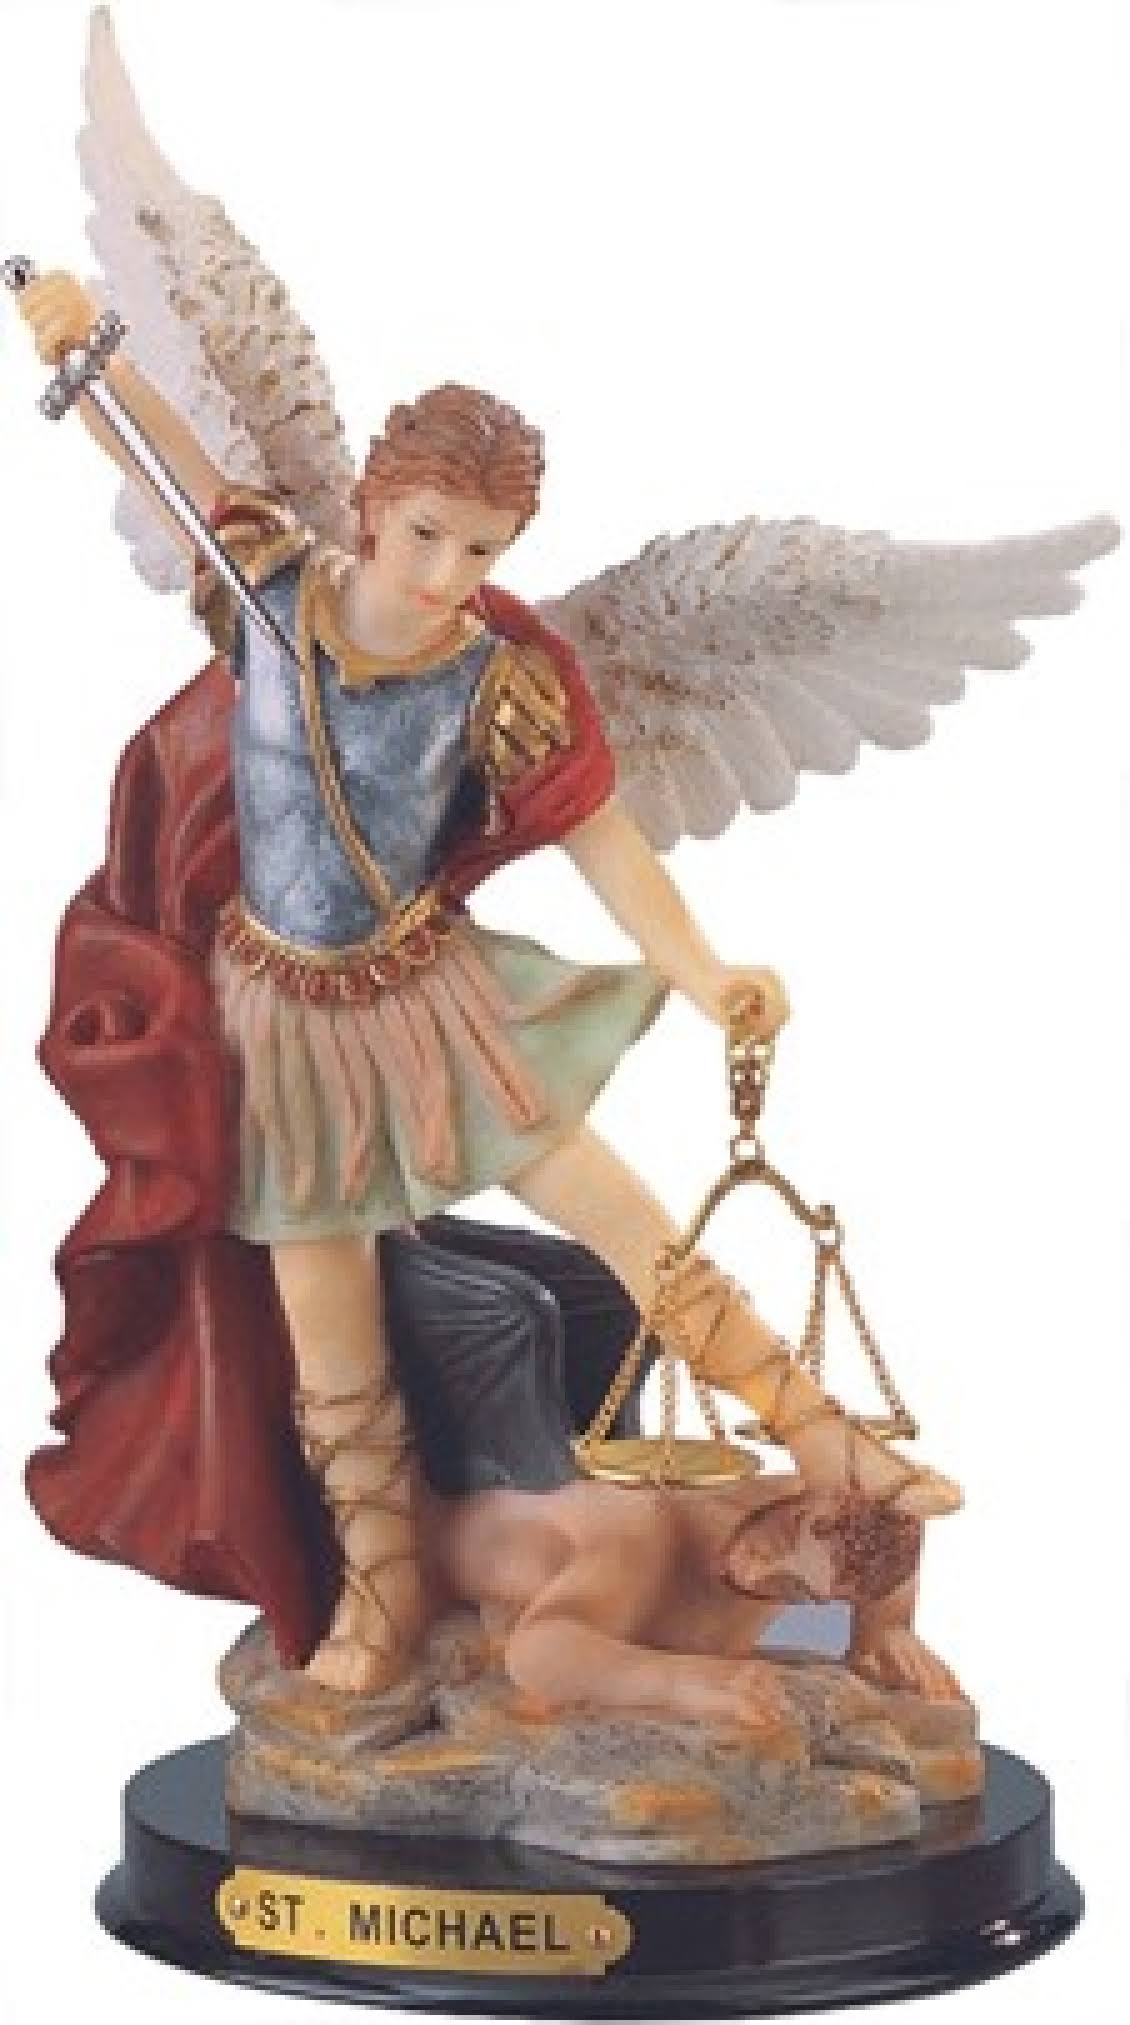 StealStreet SS-G-309.04 Saint Michael The Archangel Holy Figurine Religious Decoration 9